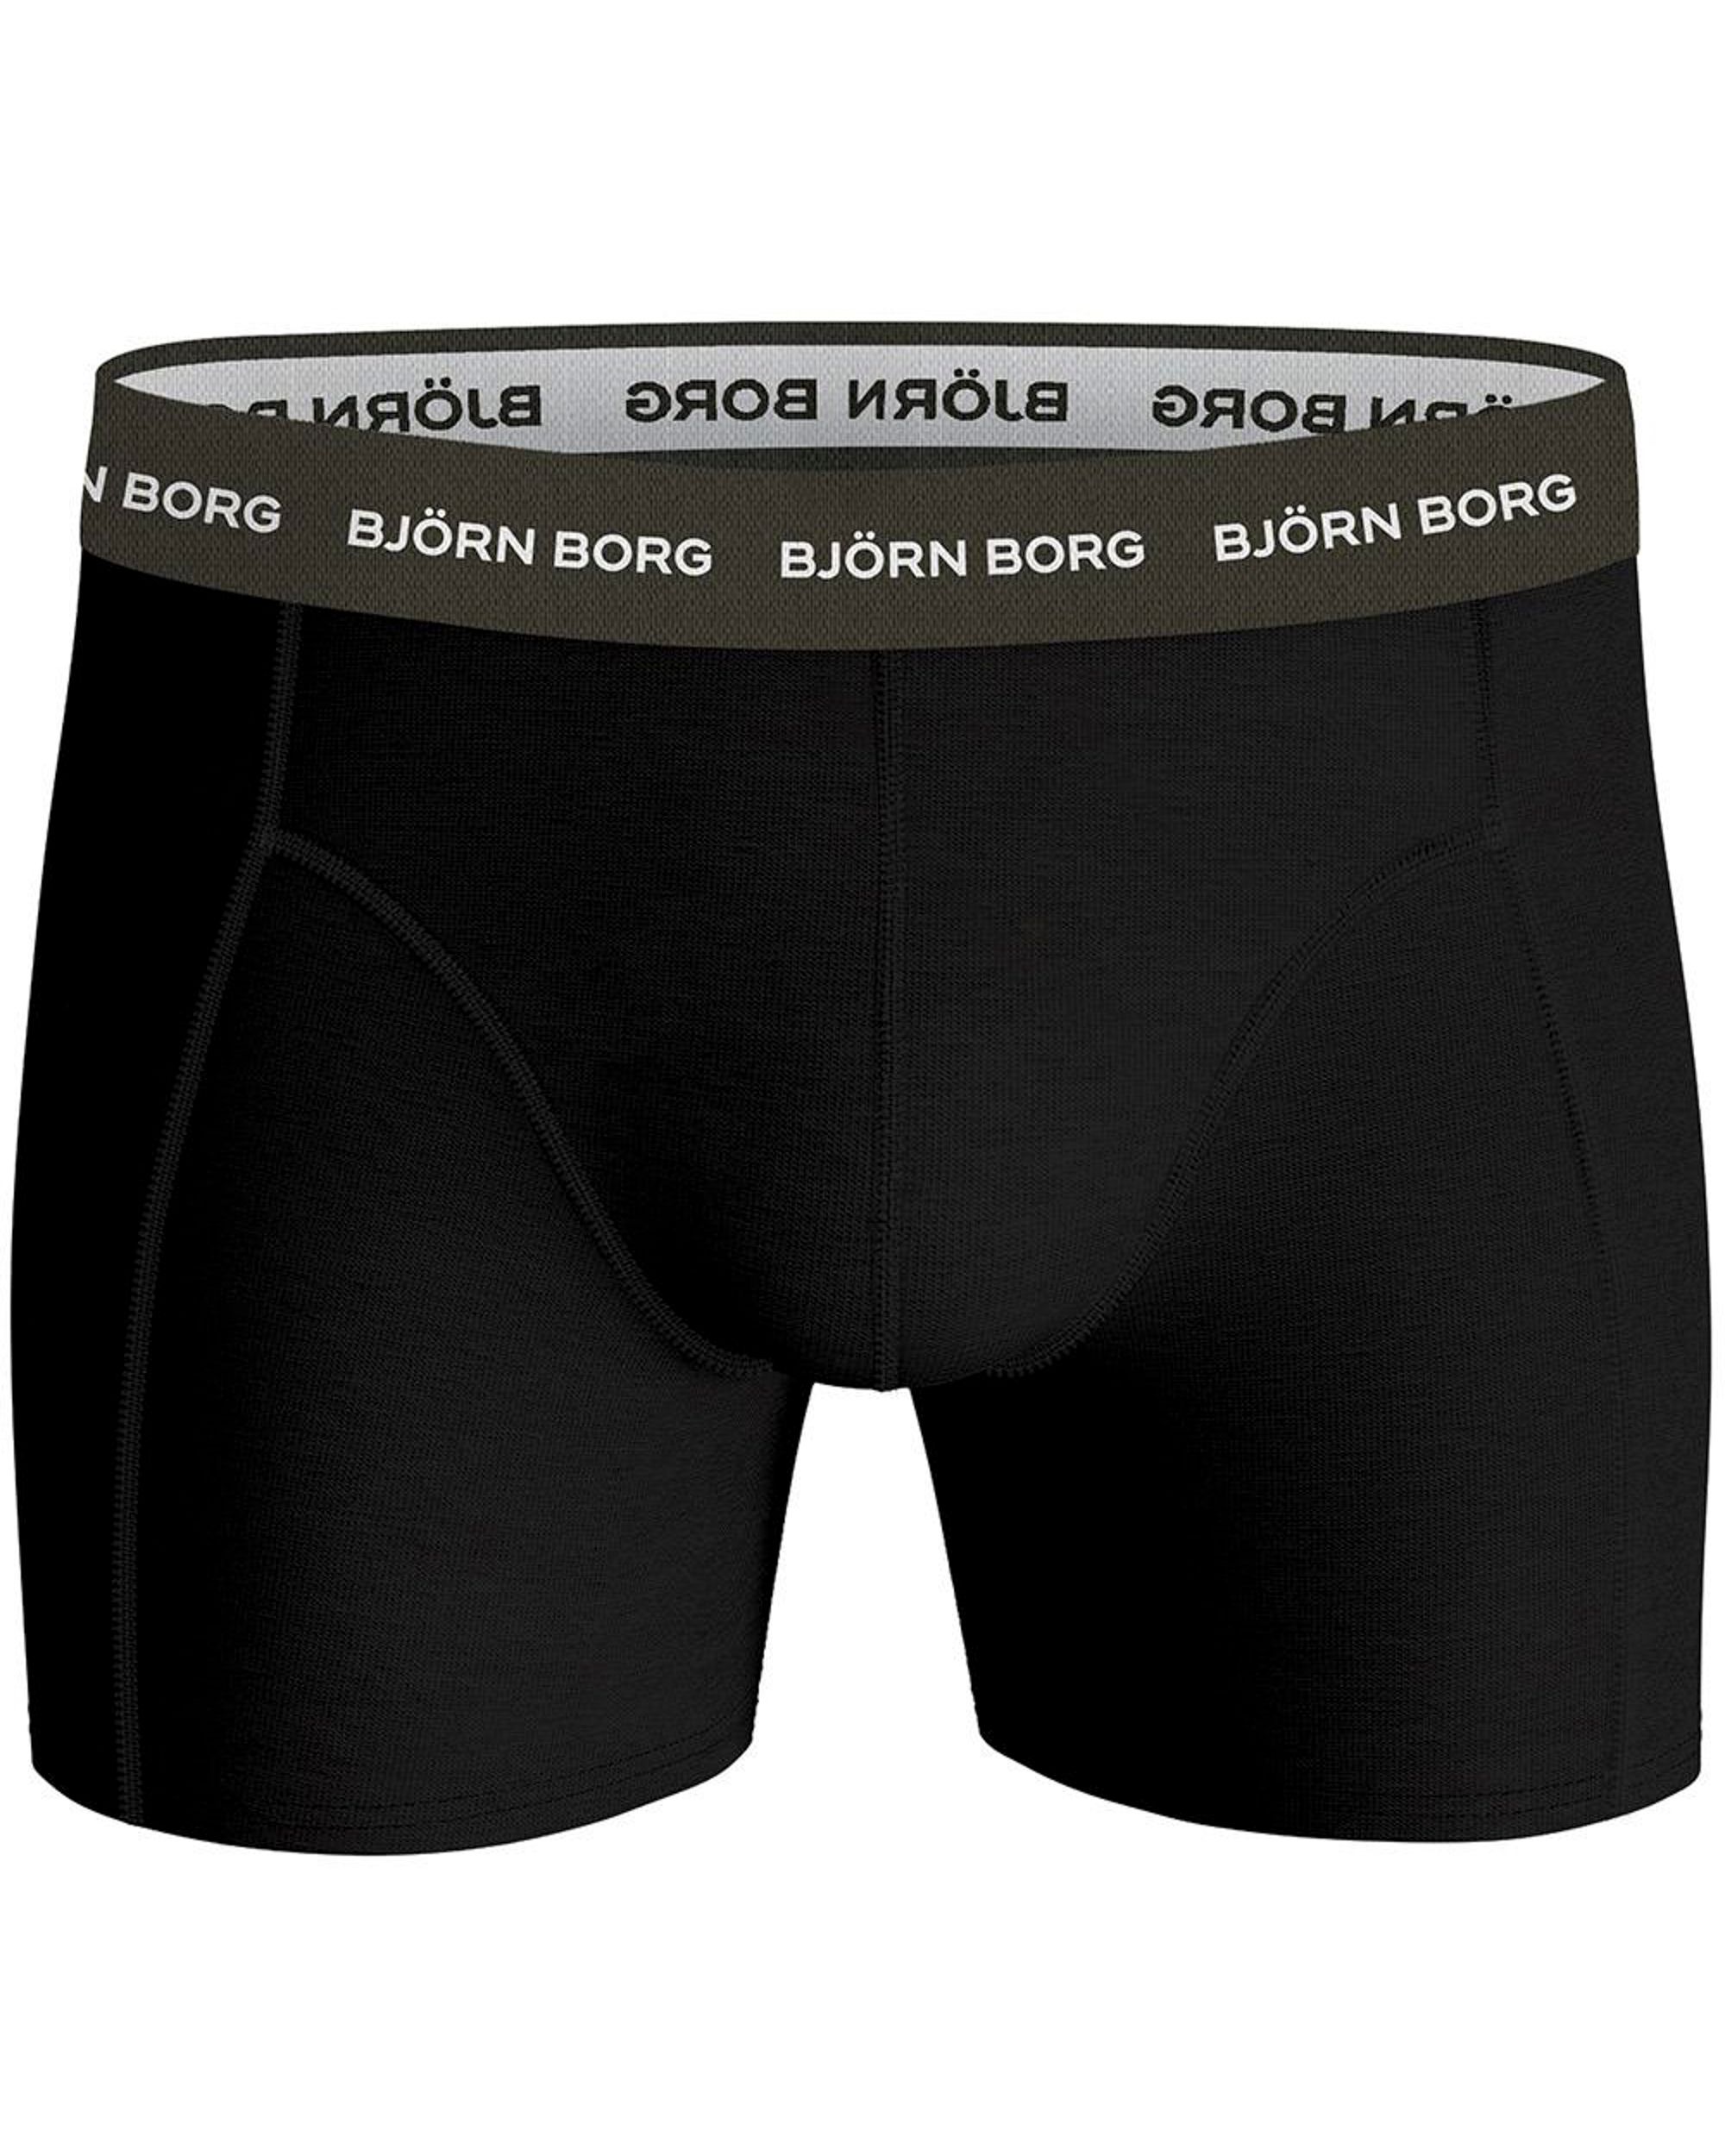 Björn Borg Boxershort 5-pack Multicolor 091862-001-M